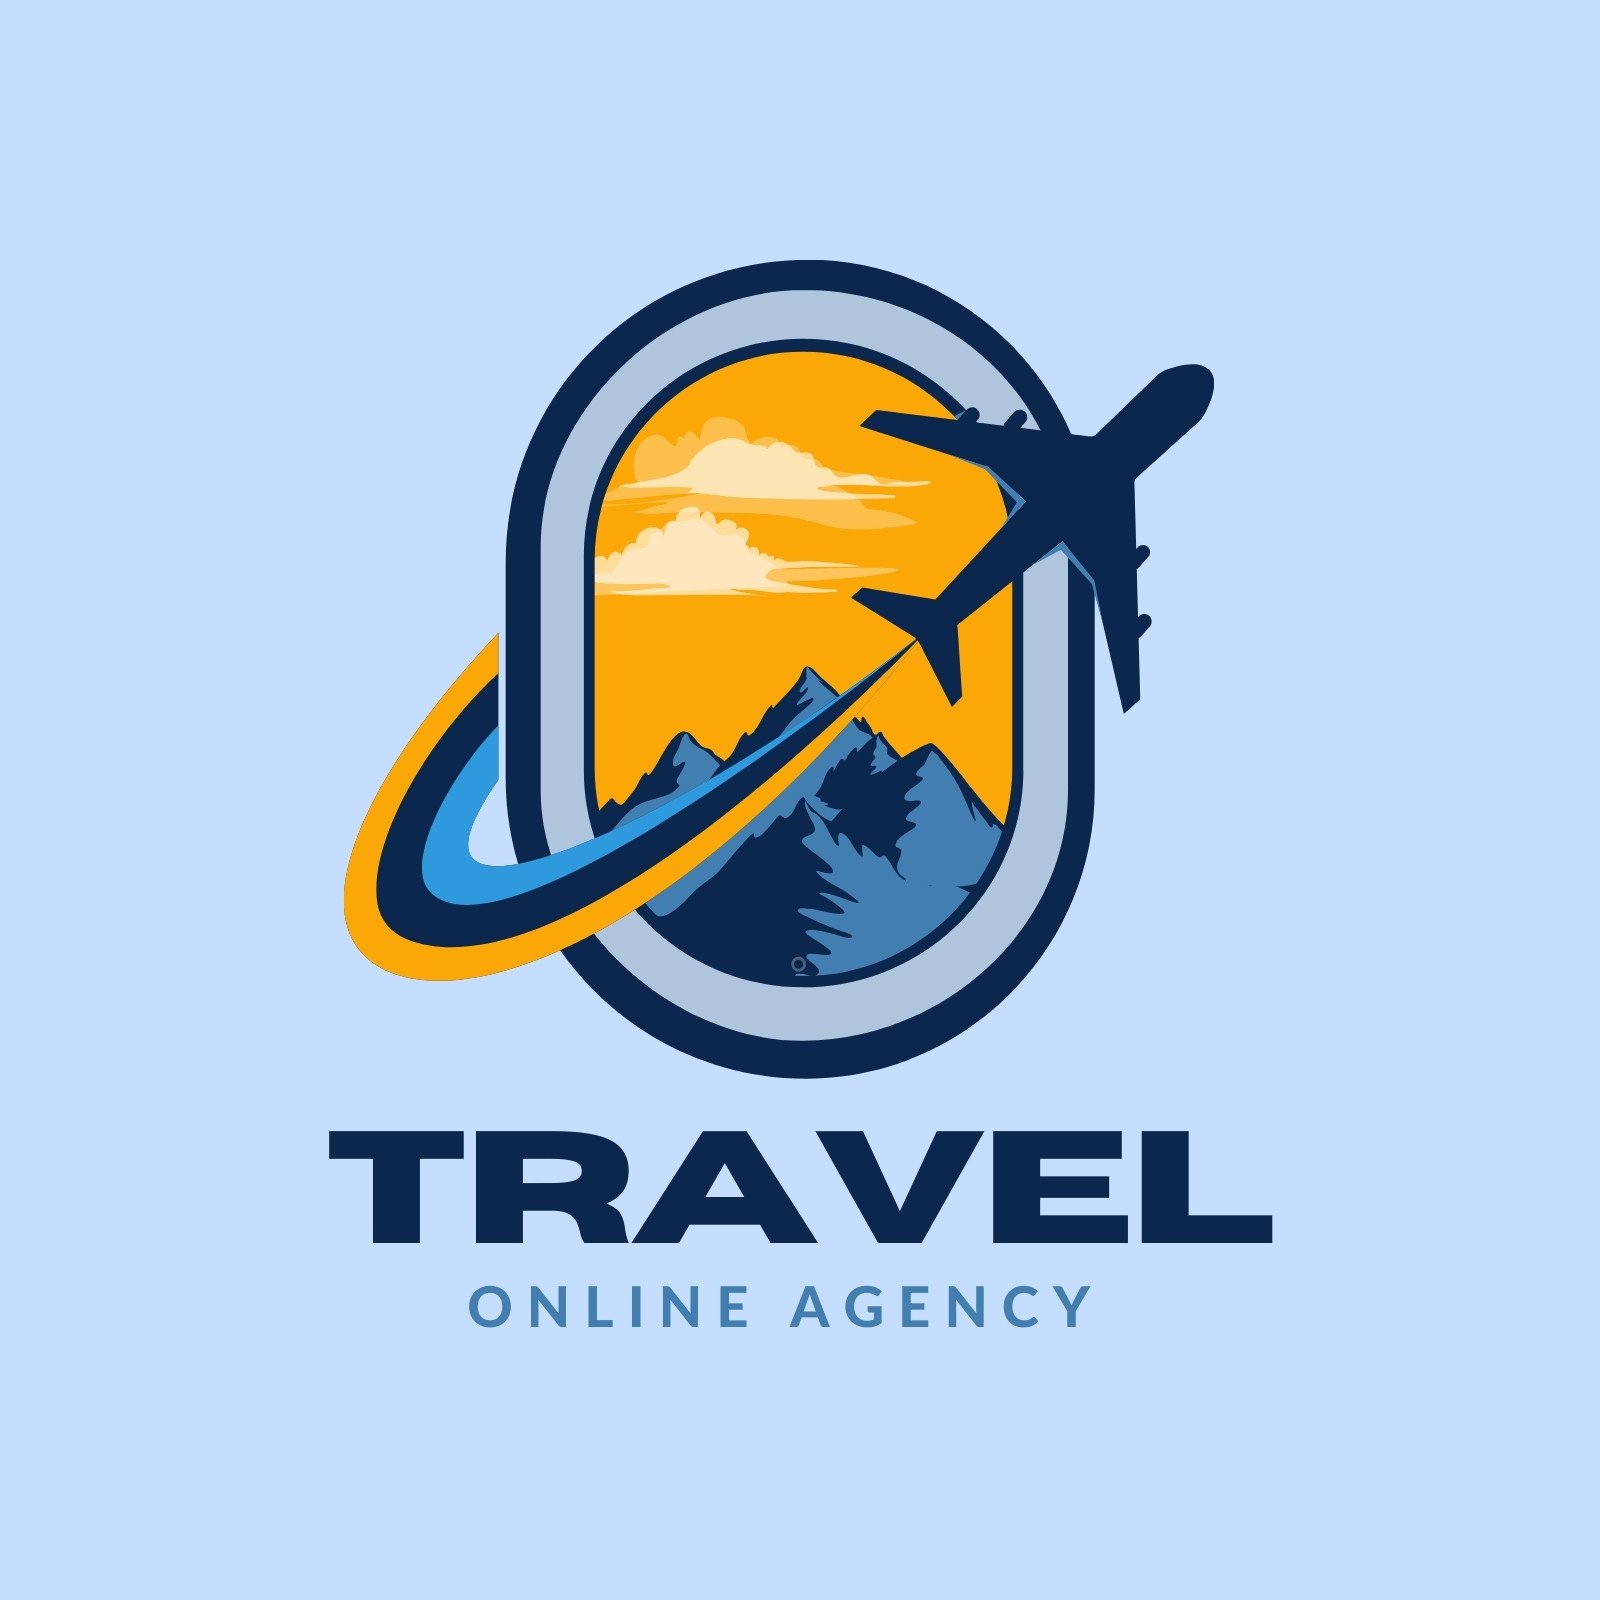 Small plane travel agency logo design idea Vector Image